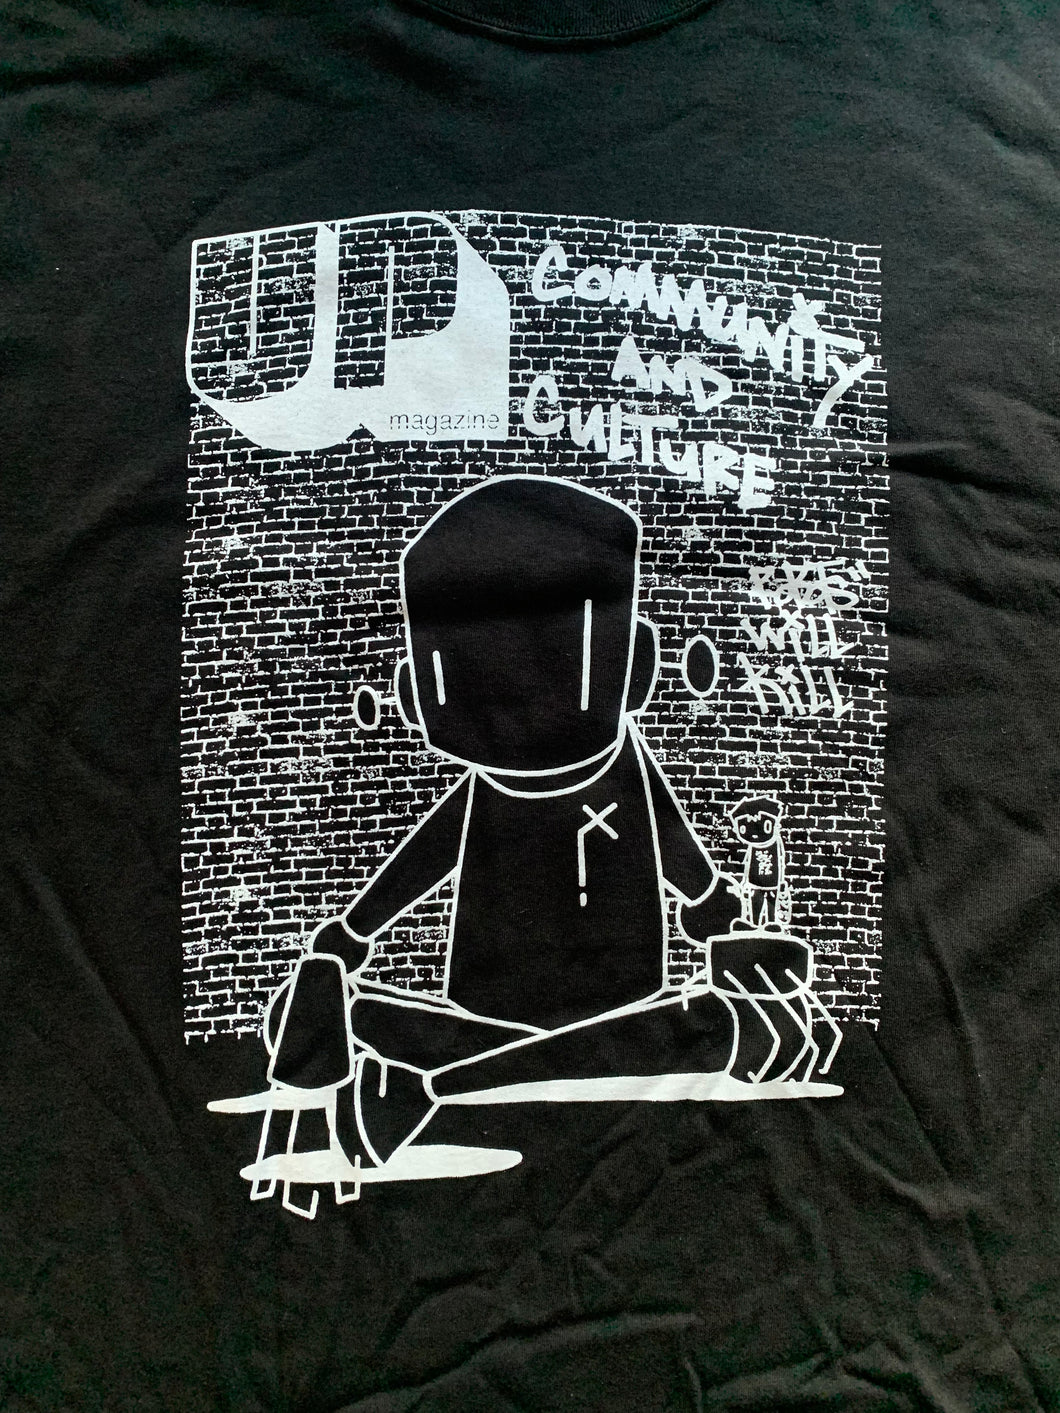 Community - Chris RWK x UP Shirt [Anniversary Edition]